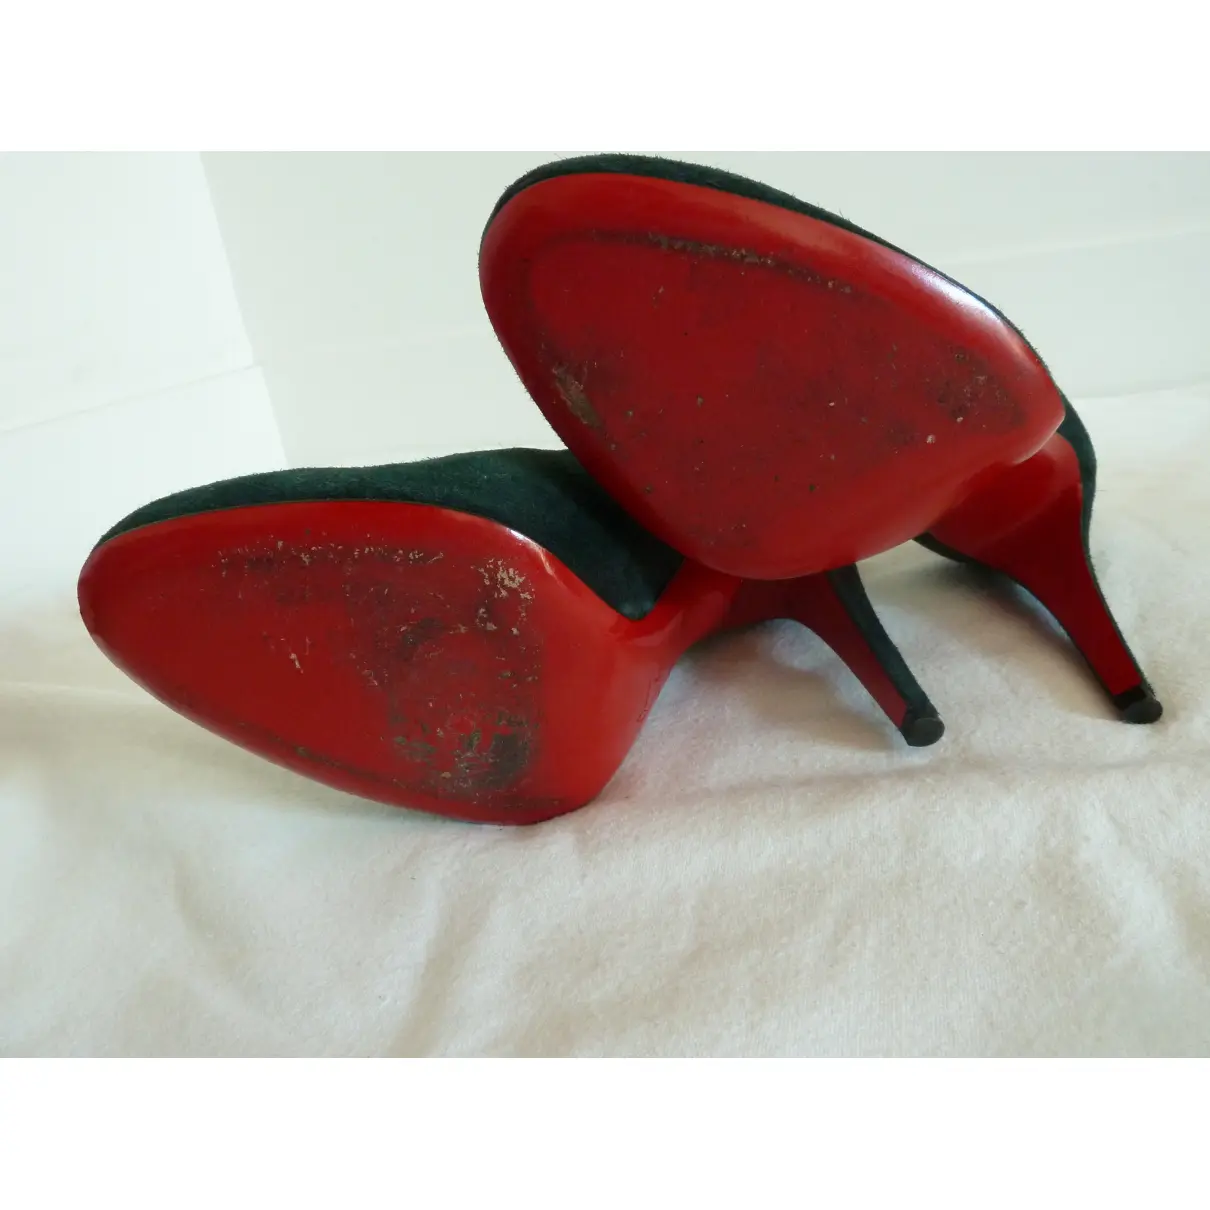 Simple pump heels Christian Louboutin